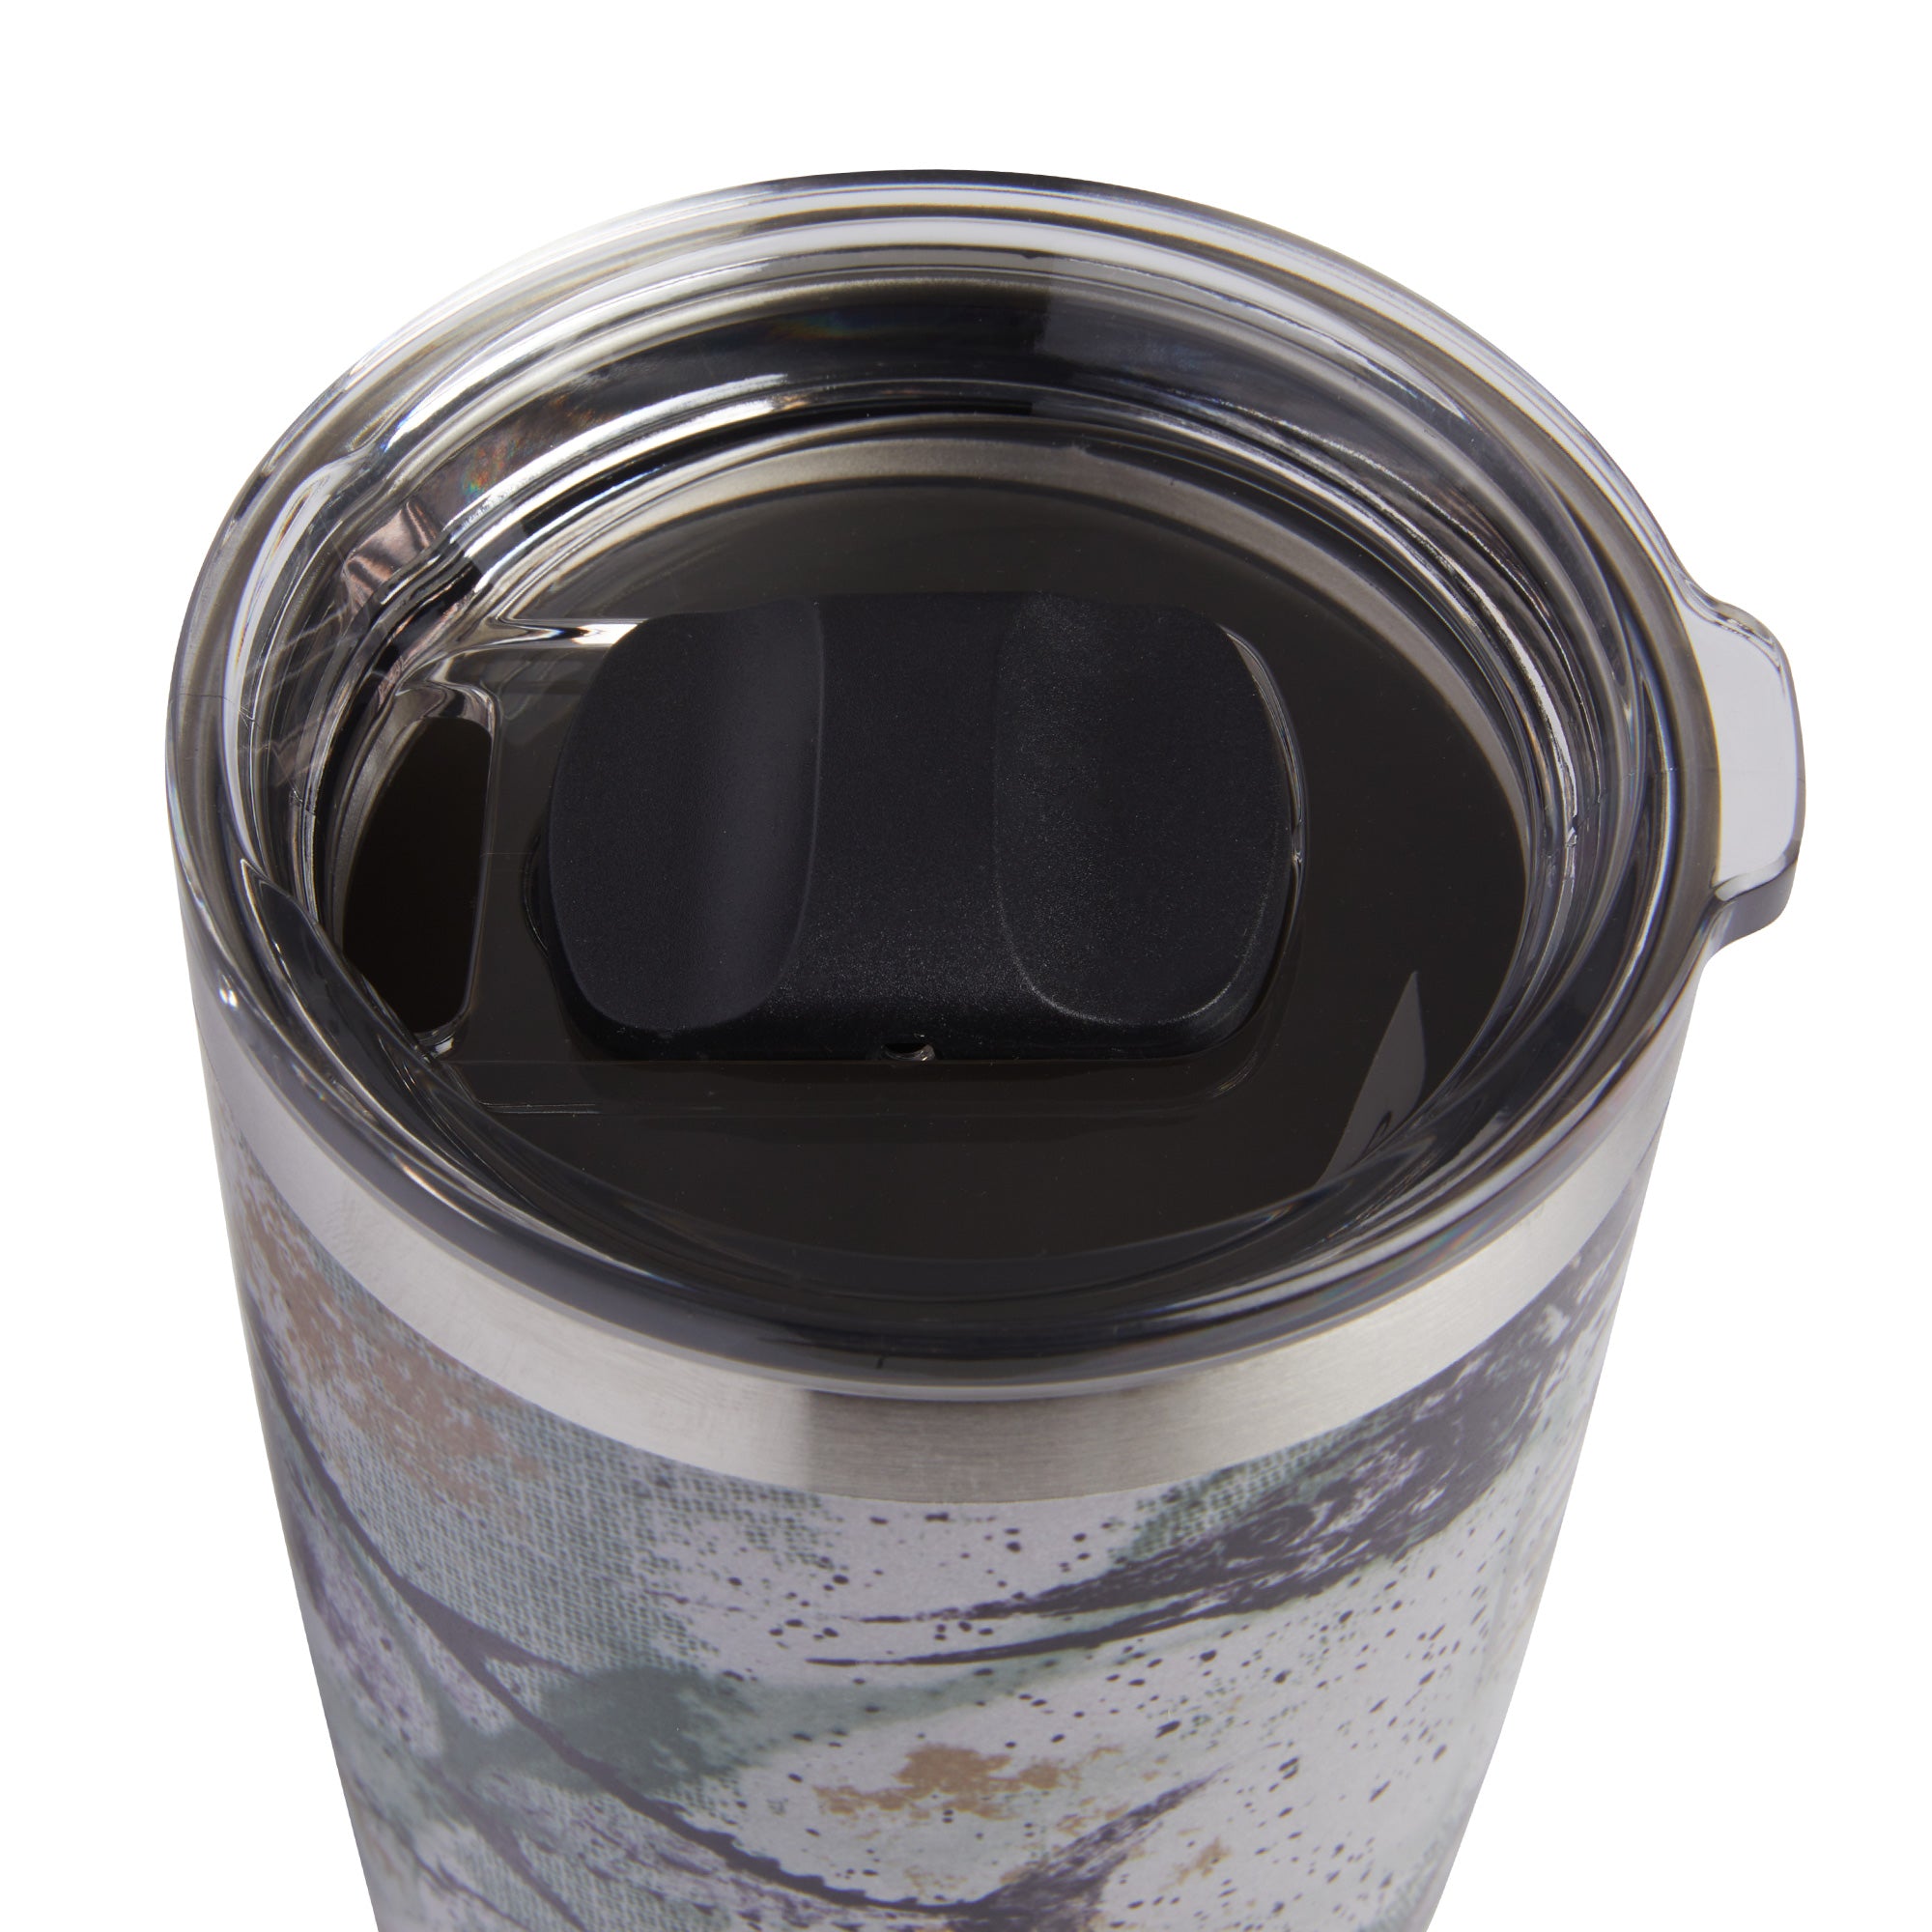 Contigo 20oz Snapseal Insulated Stainless Steel Travel Mug with